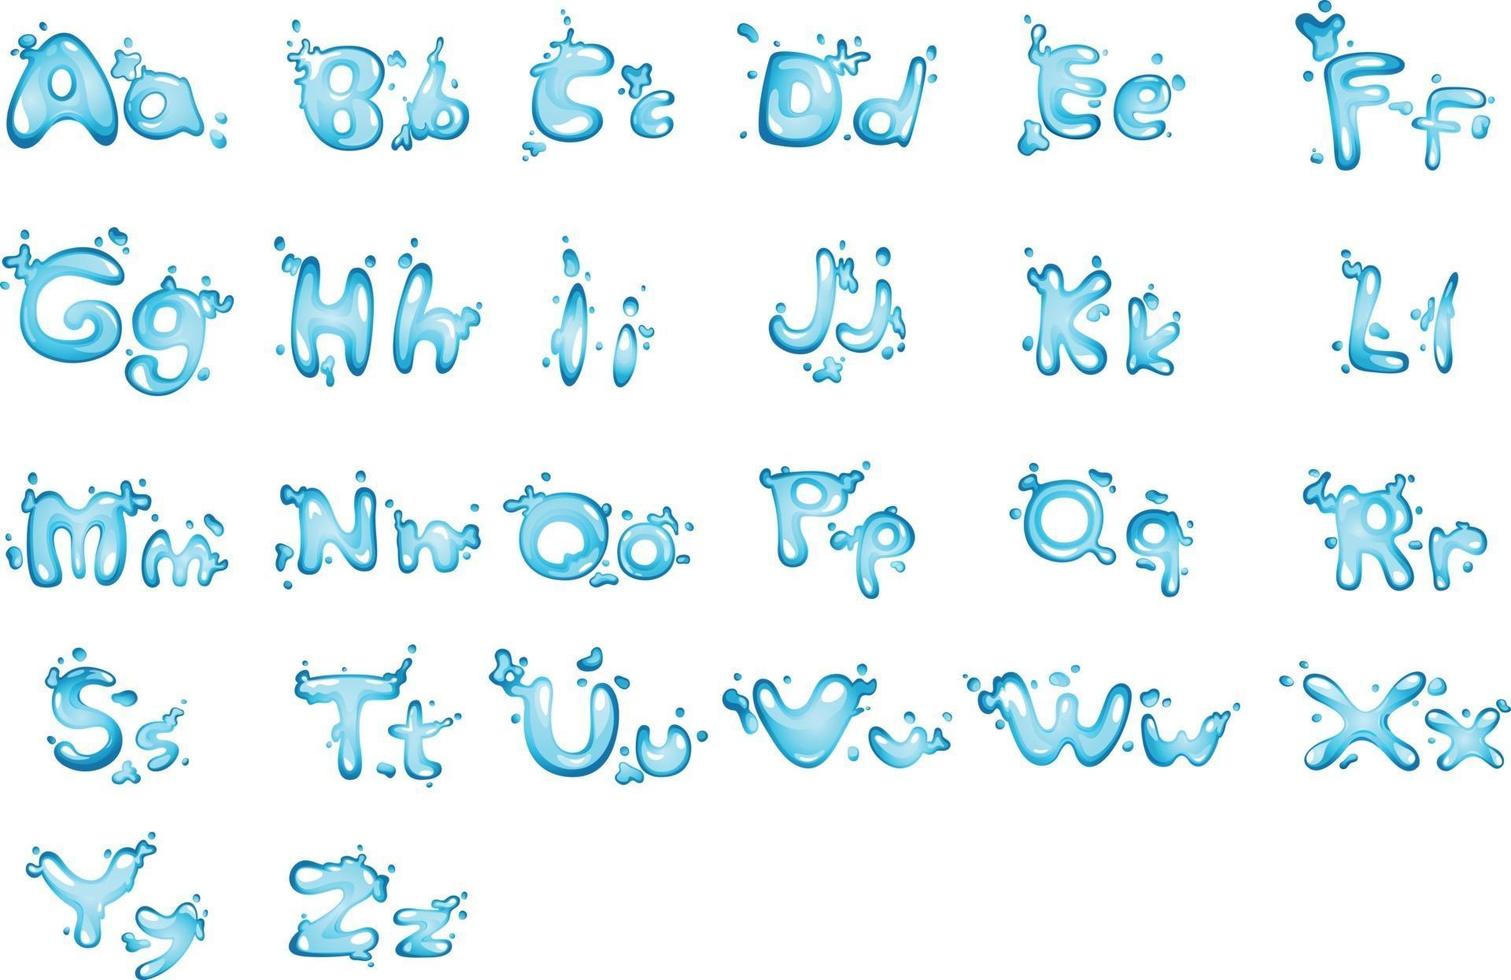 alfabetet vatten bokstaven a - z vektor